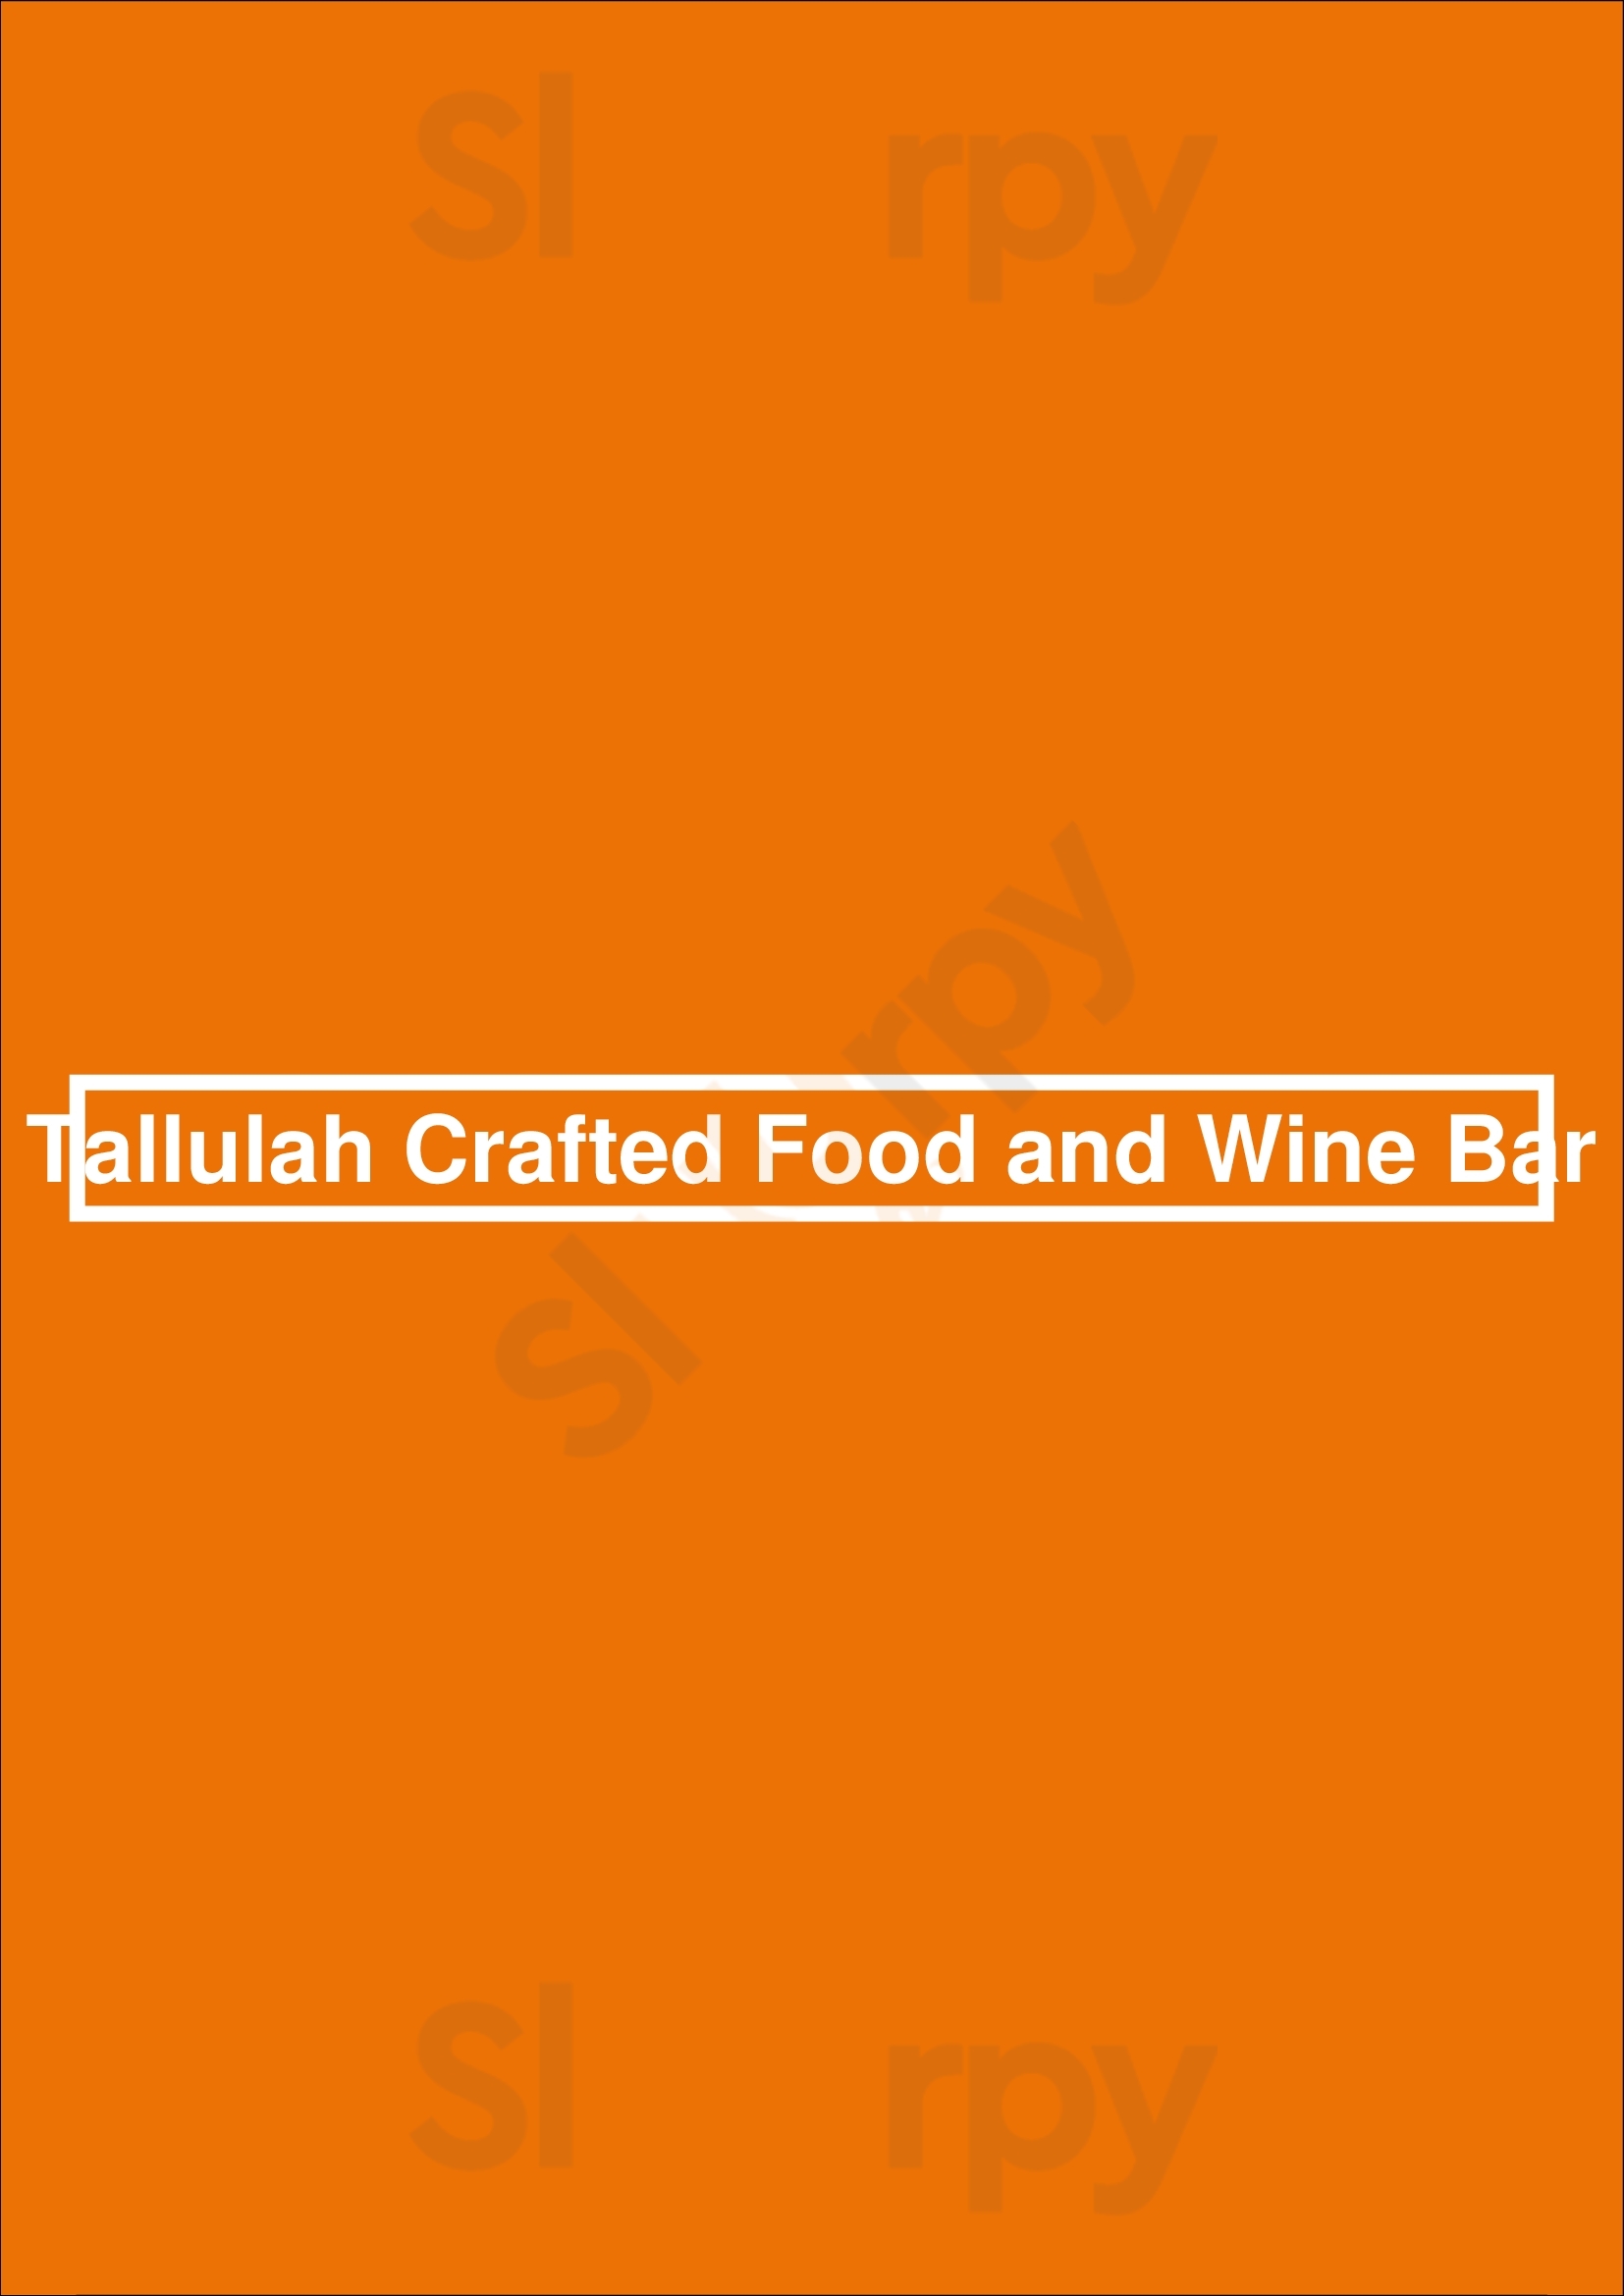 Tallulah Crafted Food And Wine Bar Baton Rouge Menu - 1